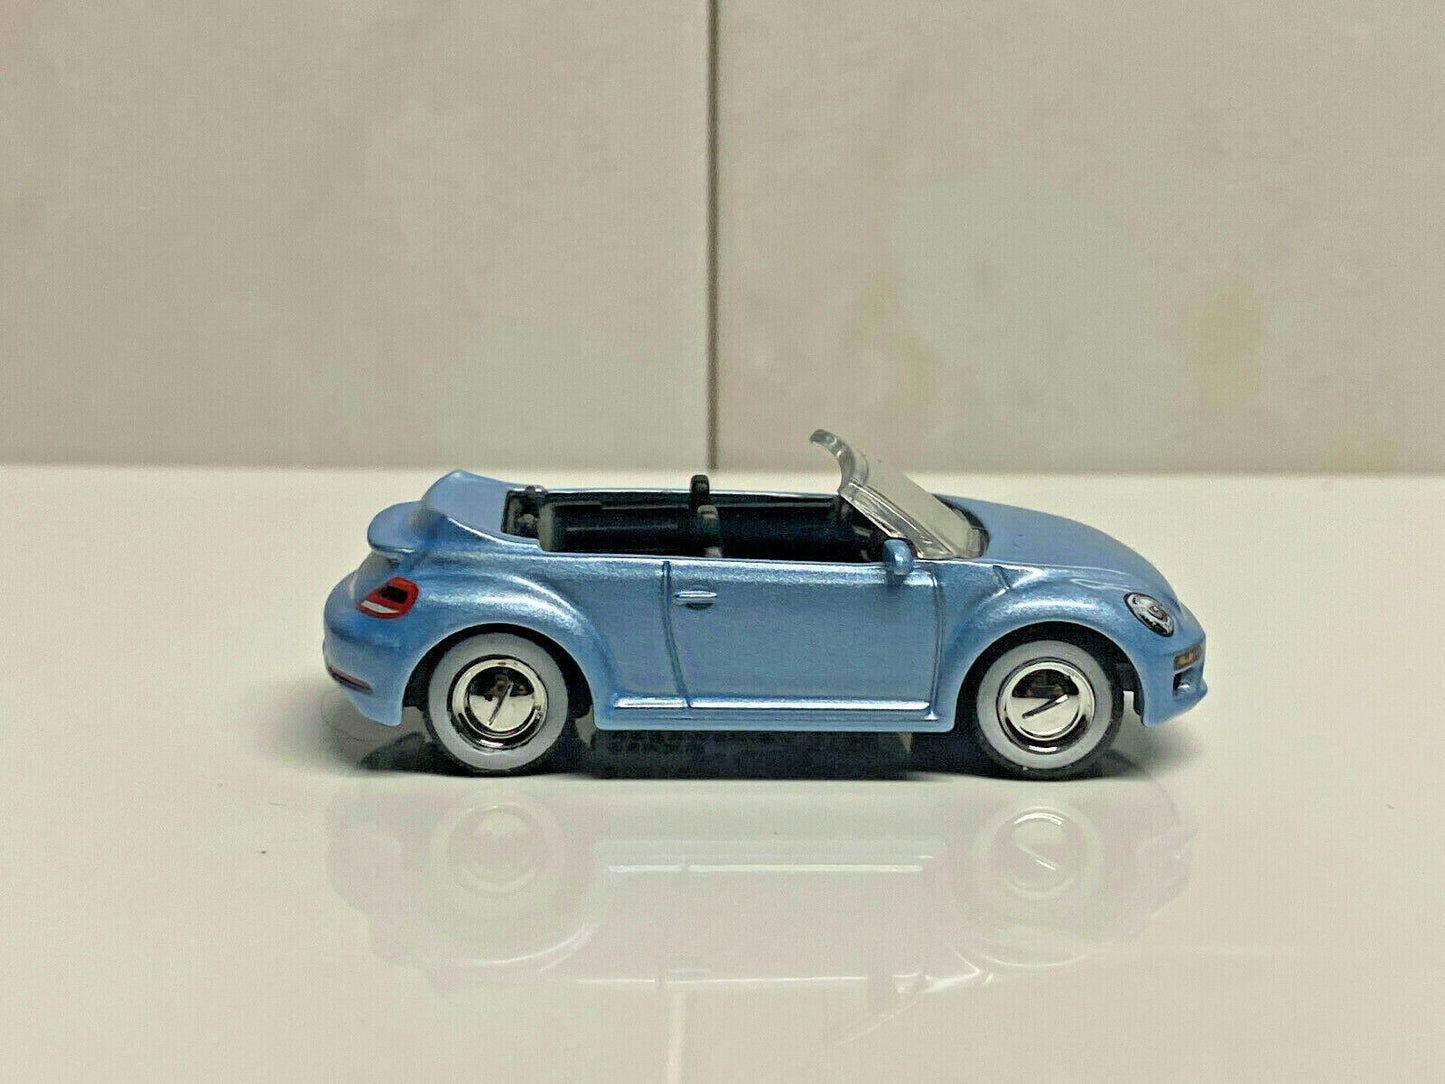 2019 Matchbox Volkswagen The Beetle Convertible BLUE REAL RIDERS SUPER CUSTOM